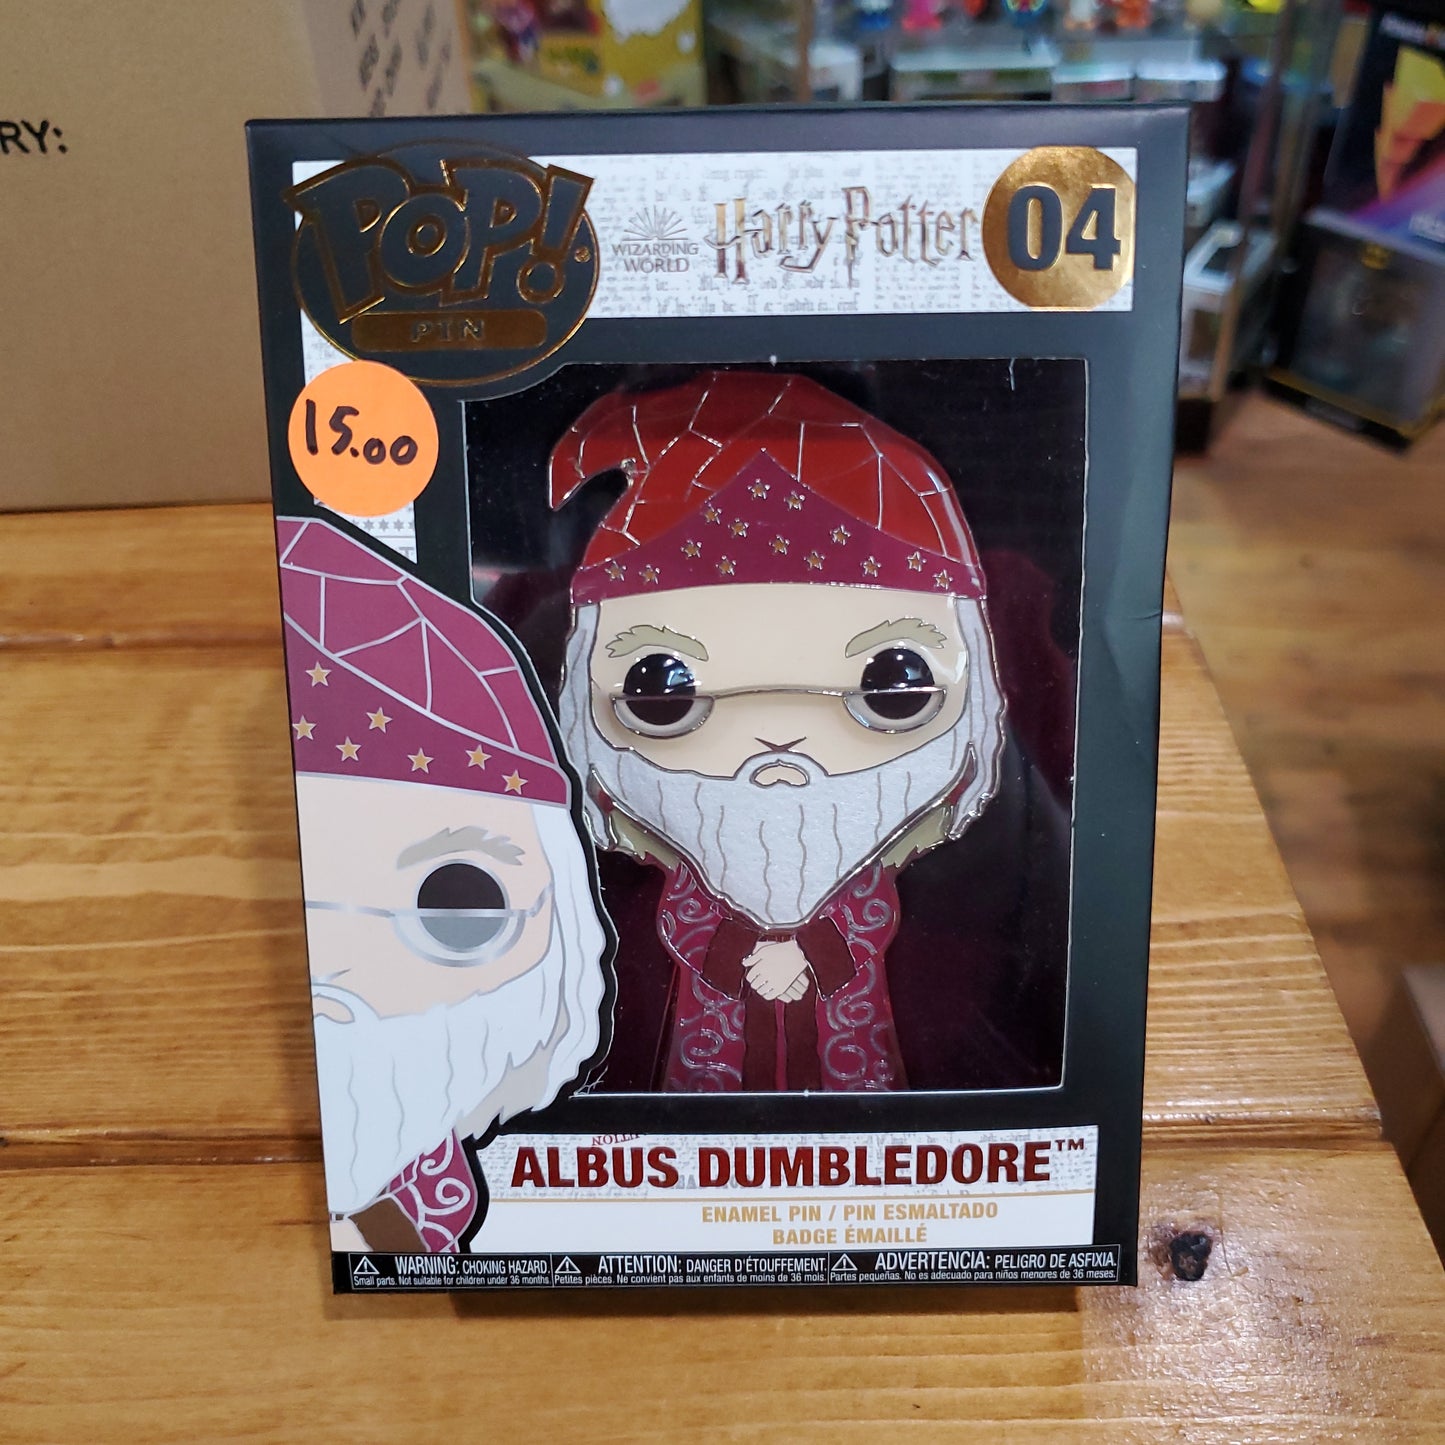 Harry Potter - Albus Dumbledore #04 - Funko Pop! Pin